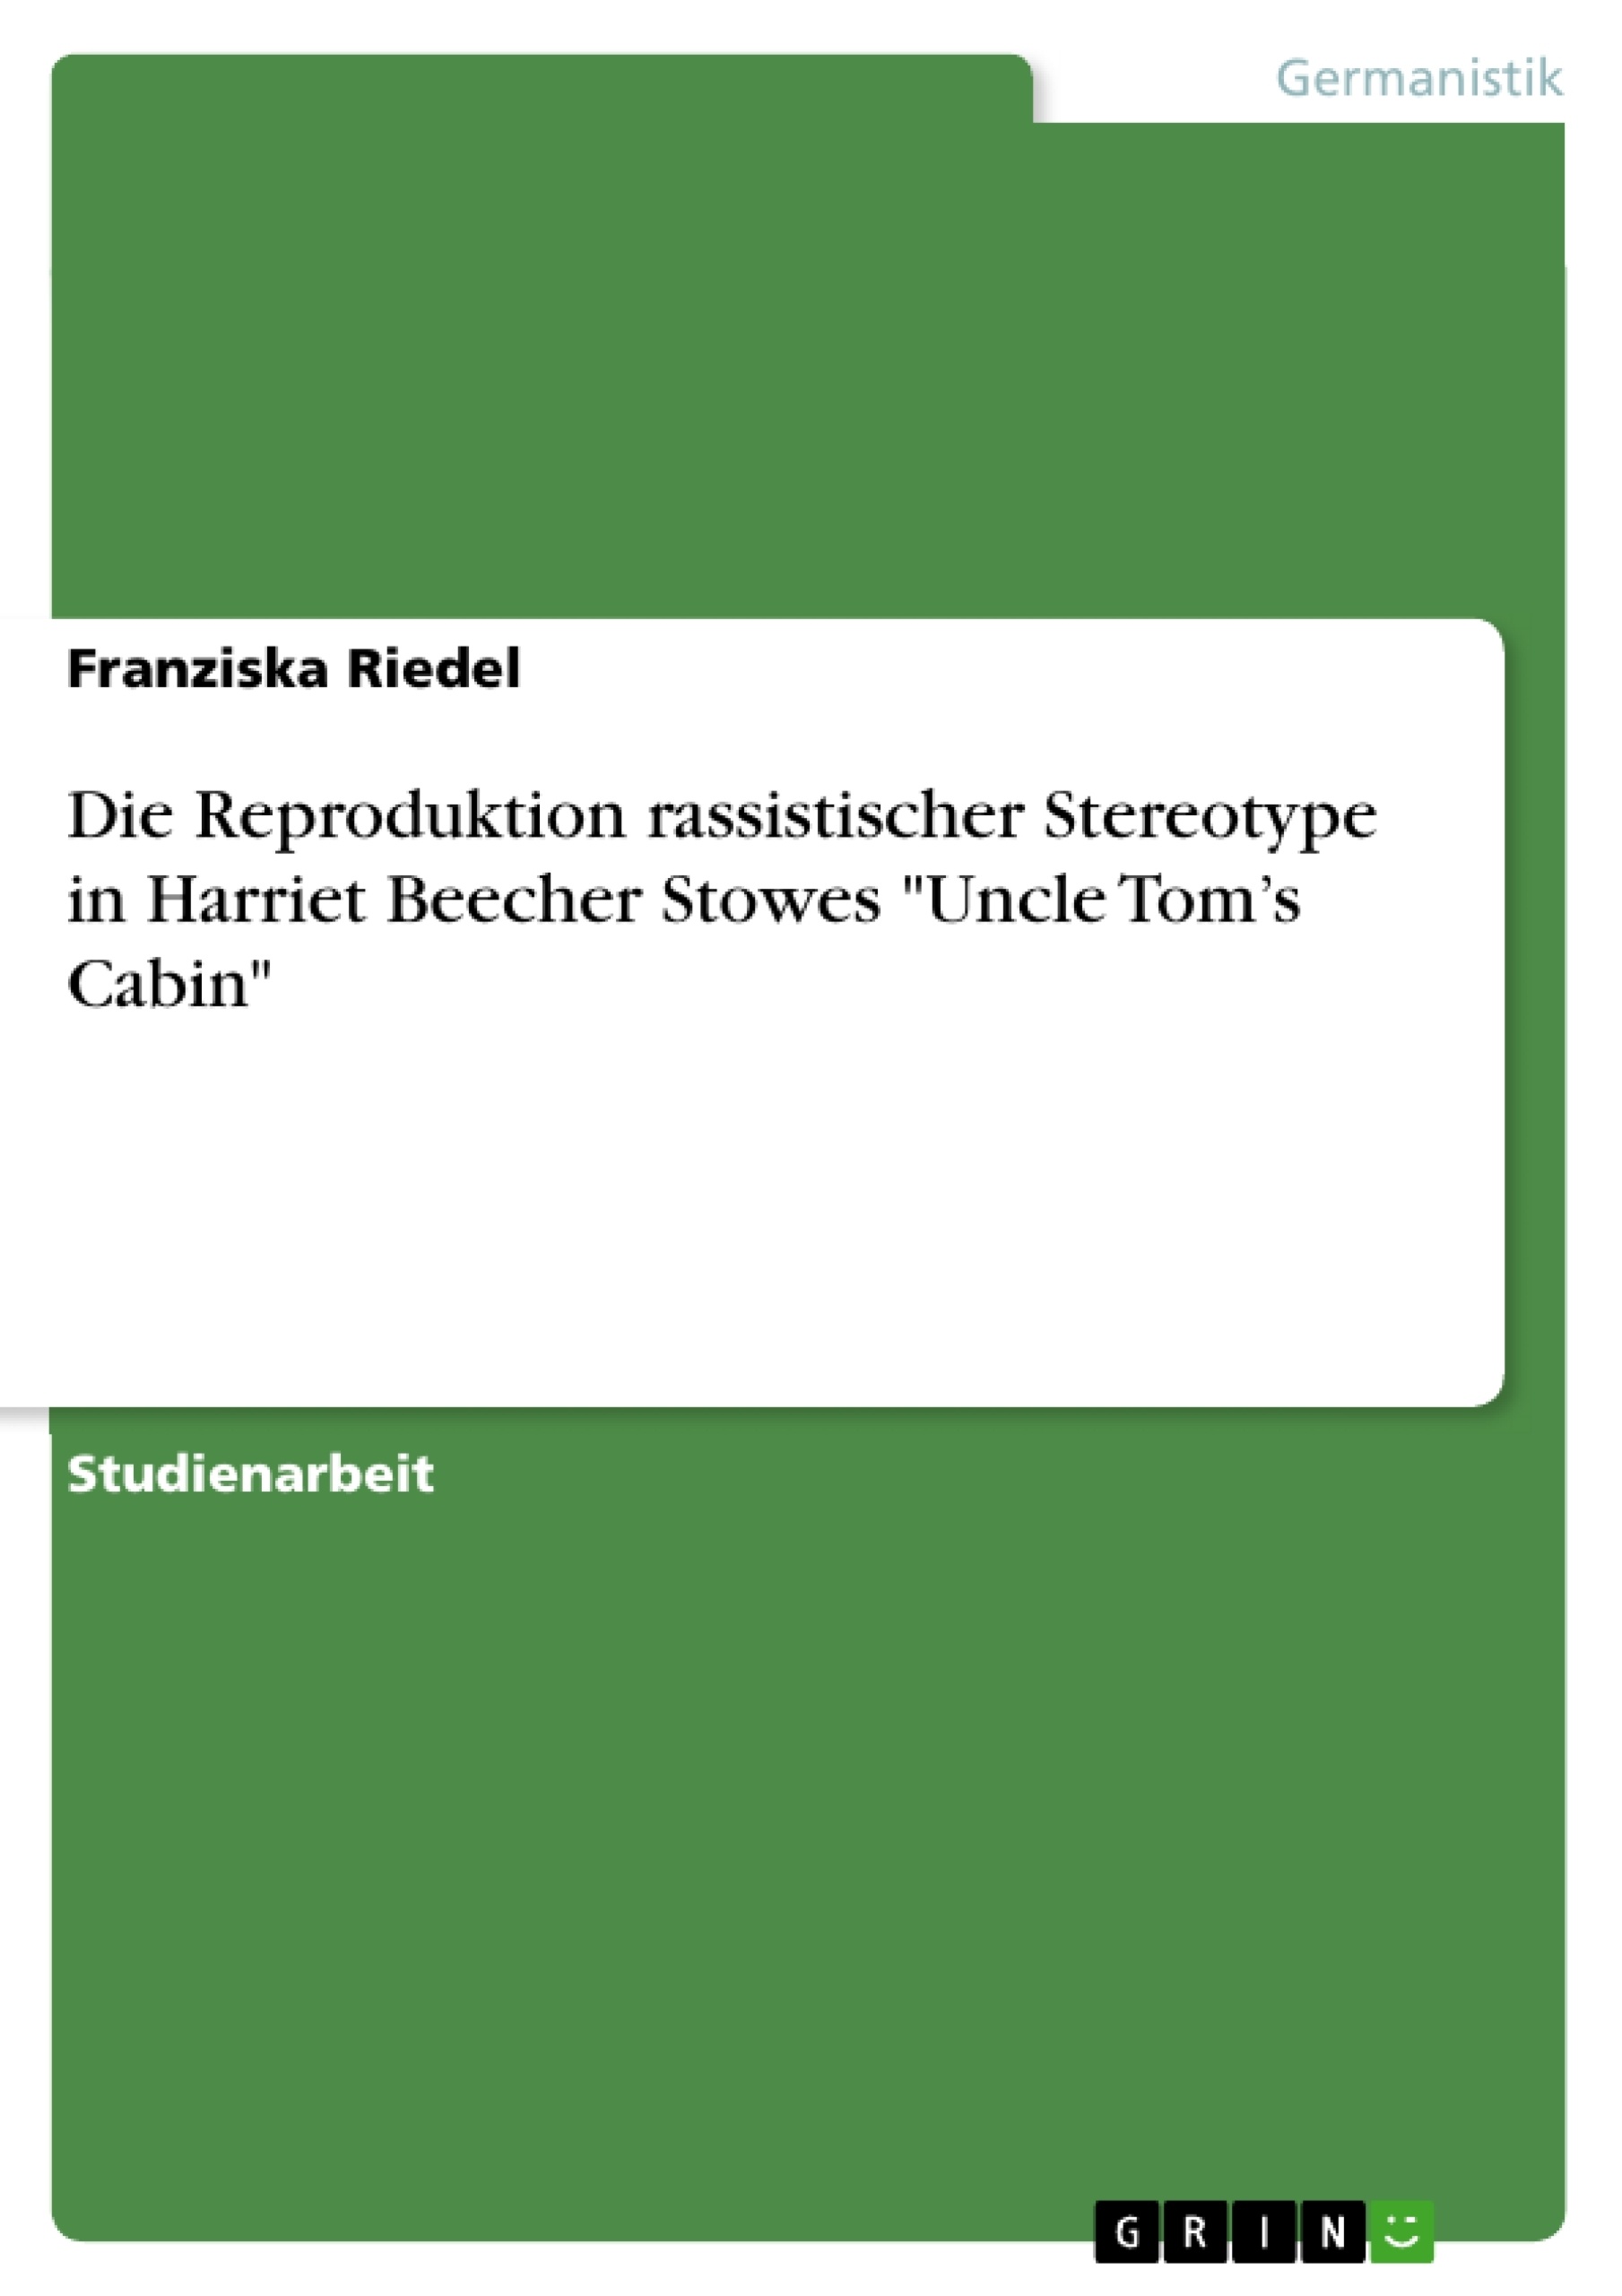 Titre: Die Reproduktion rassistischer Stereotype in Harriet Beecher Stowes "Uncle Tom’s Cabin"